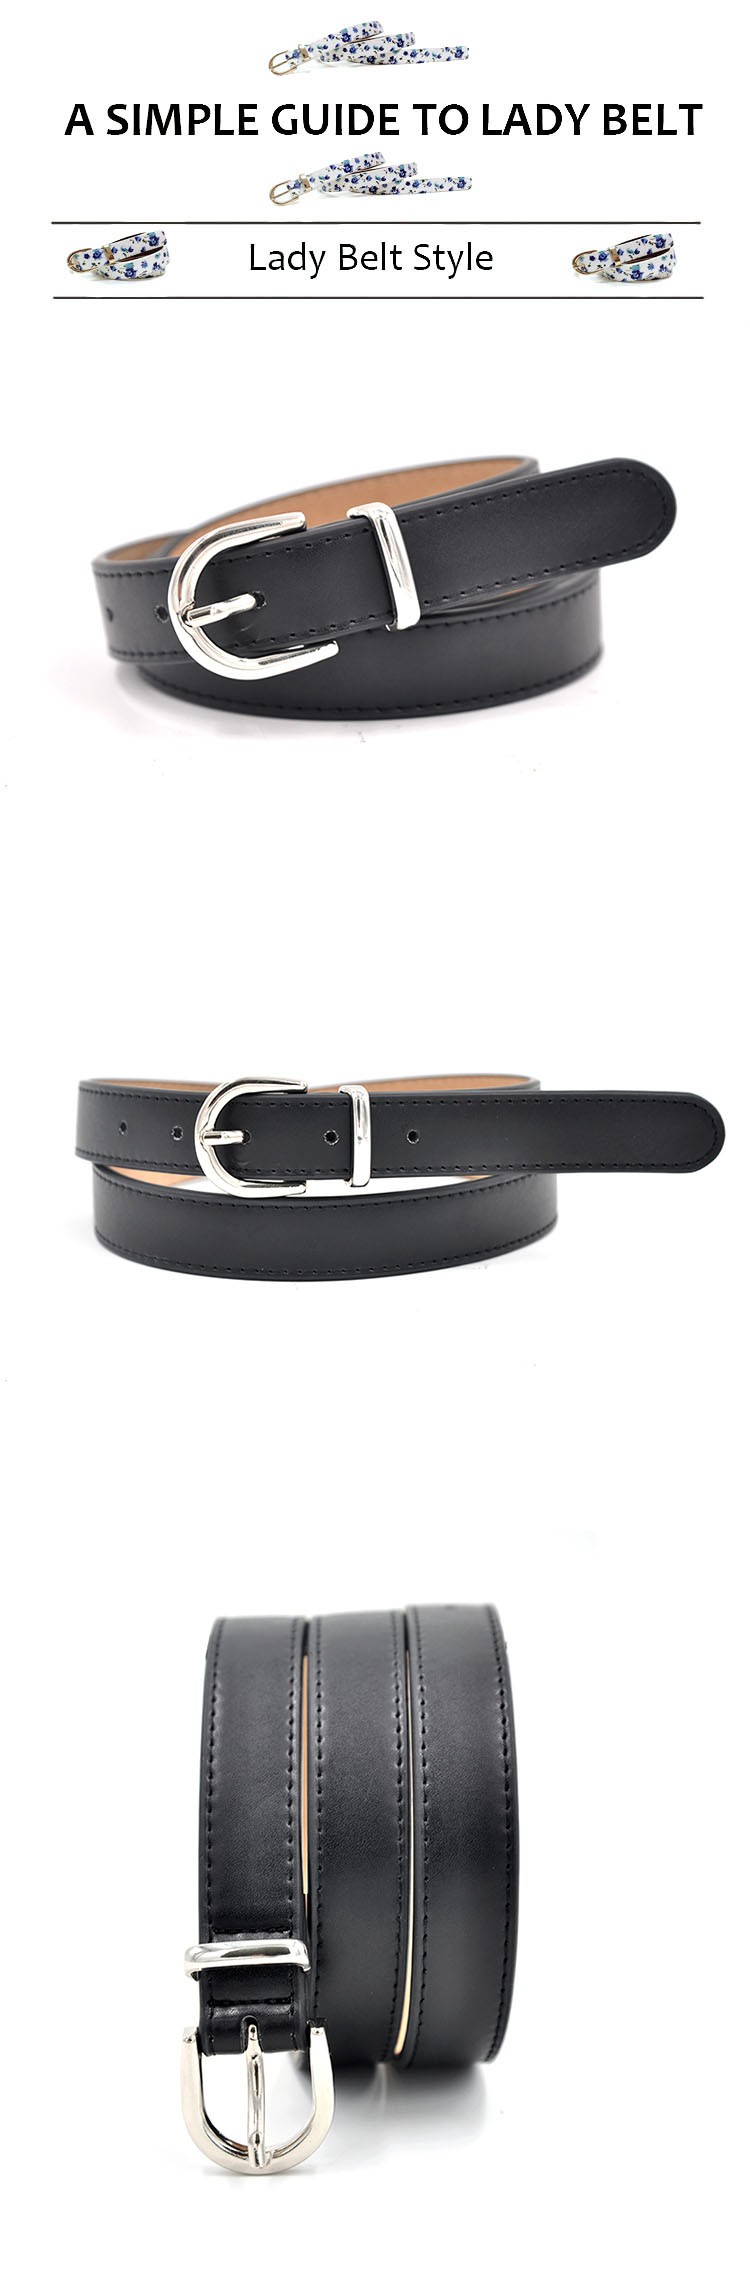 Women-Belt-Cummerbunds-Belts-For-Women-Dress-Apparel-Lady-Belt-Waist-Pu-Leather-Black-Women39s-Belts-32739288661